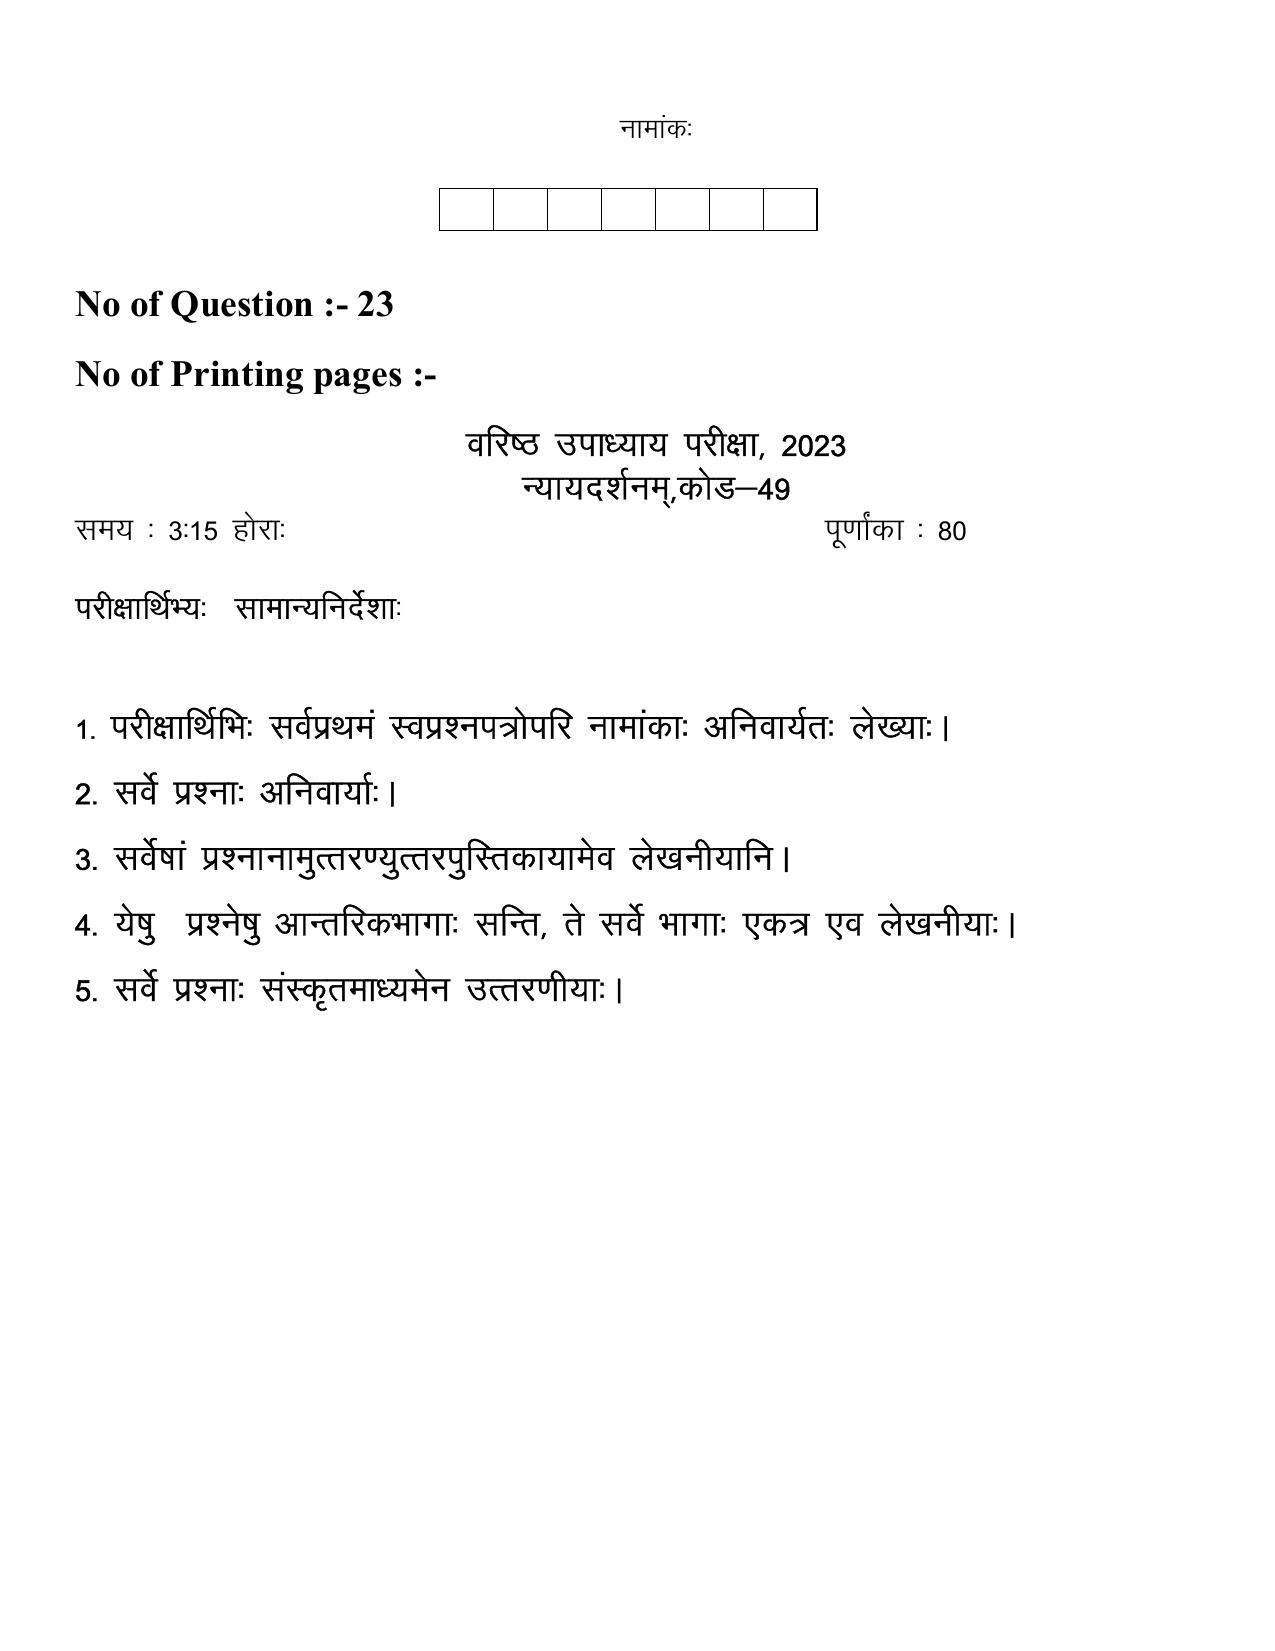 RBSE 2023 NYAYA DARSHANM Varishtha Upadhyay Paper - Page 5